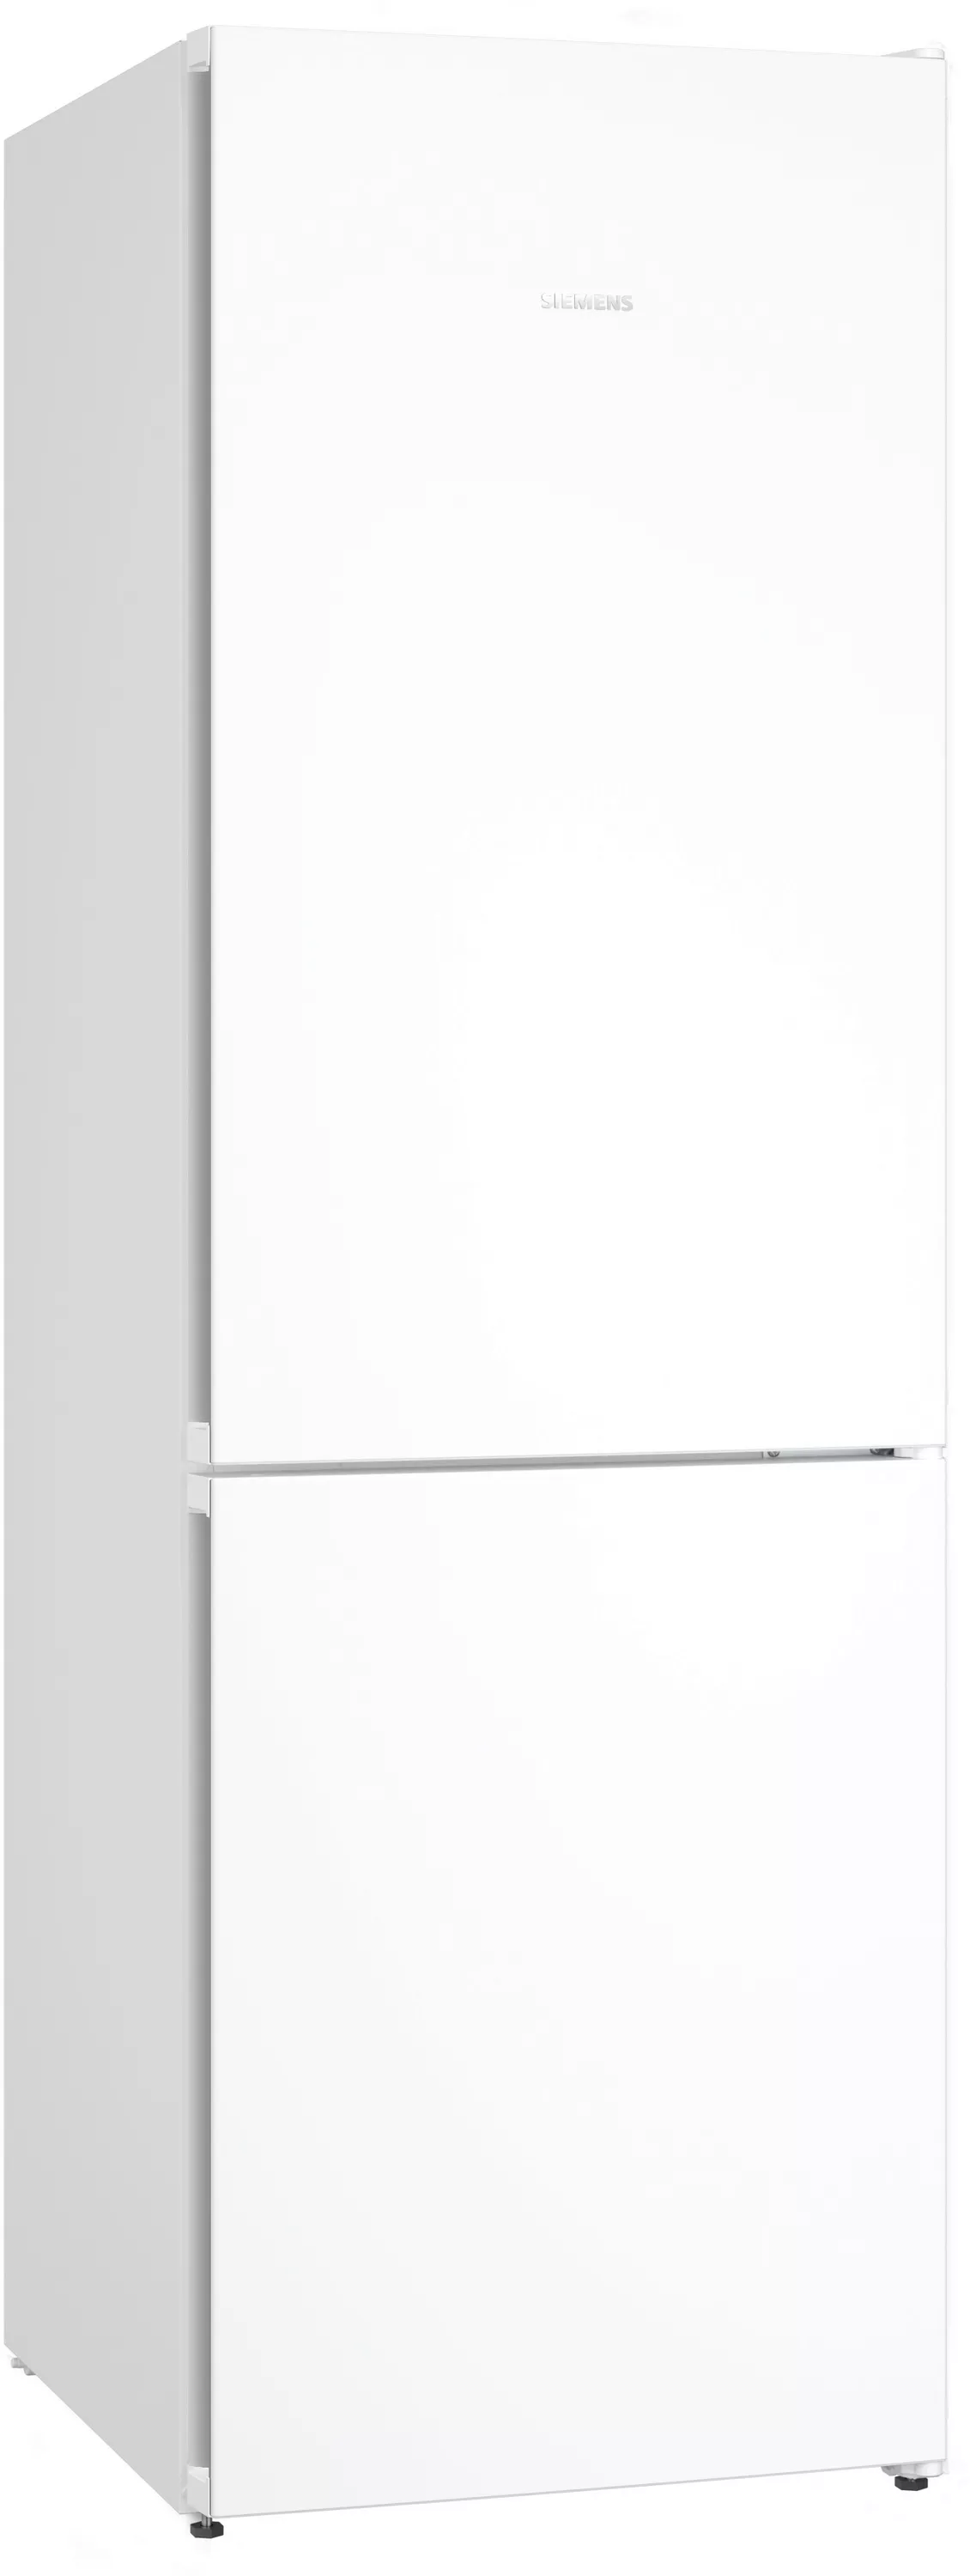 Siemens  KG36N2WCF, Freistehende Kühl-Gefrier-Kombination, 186 x 60 cm, Weiß